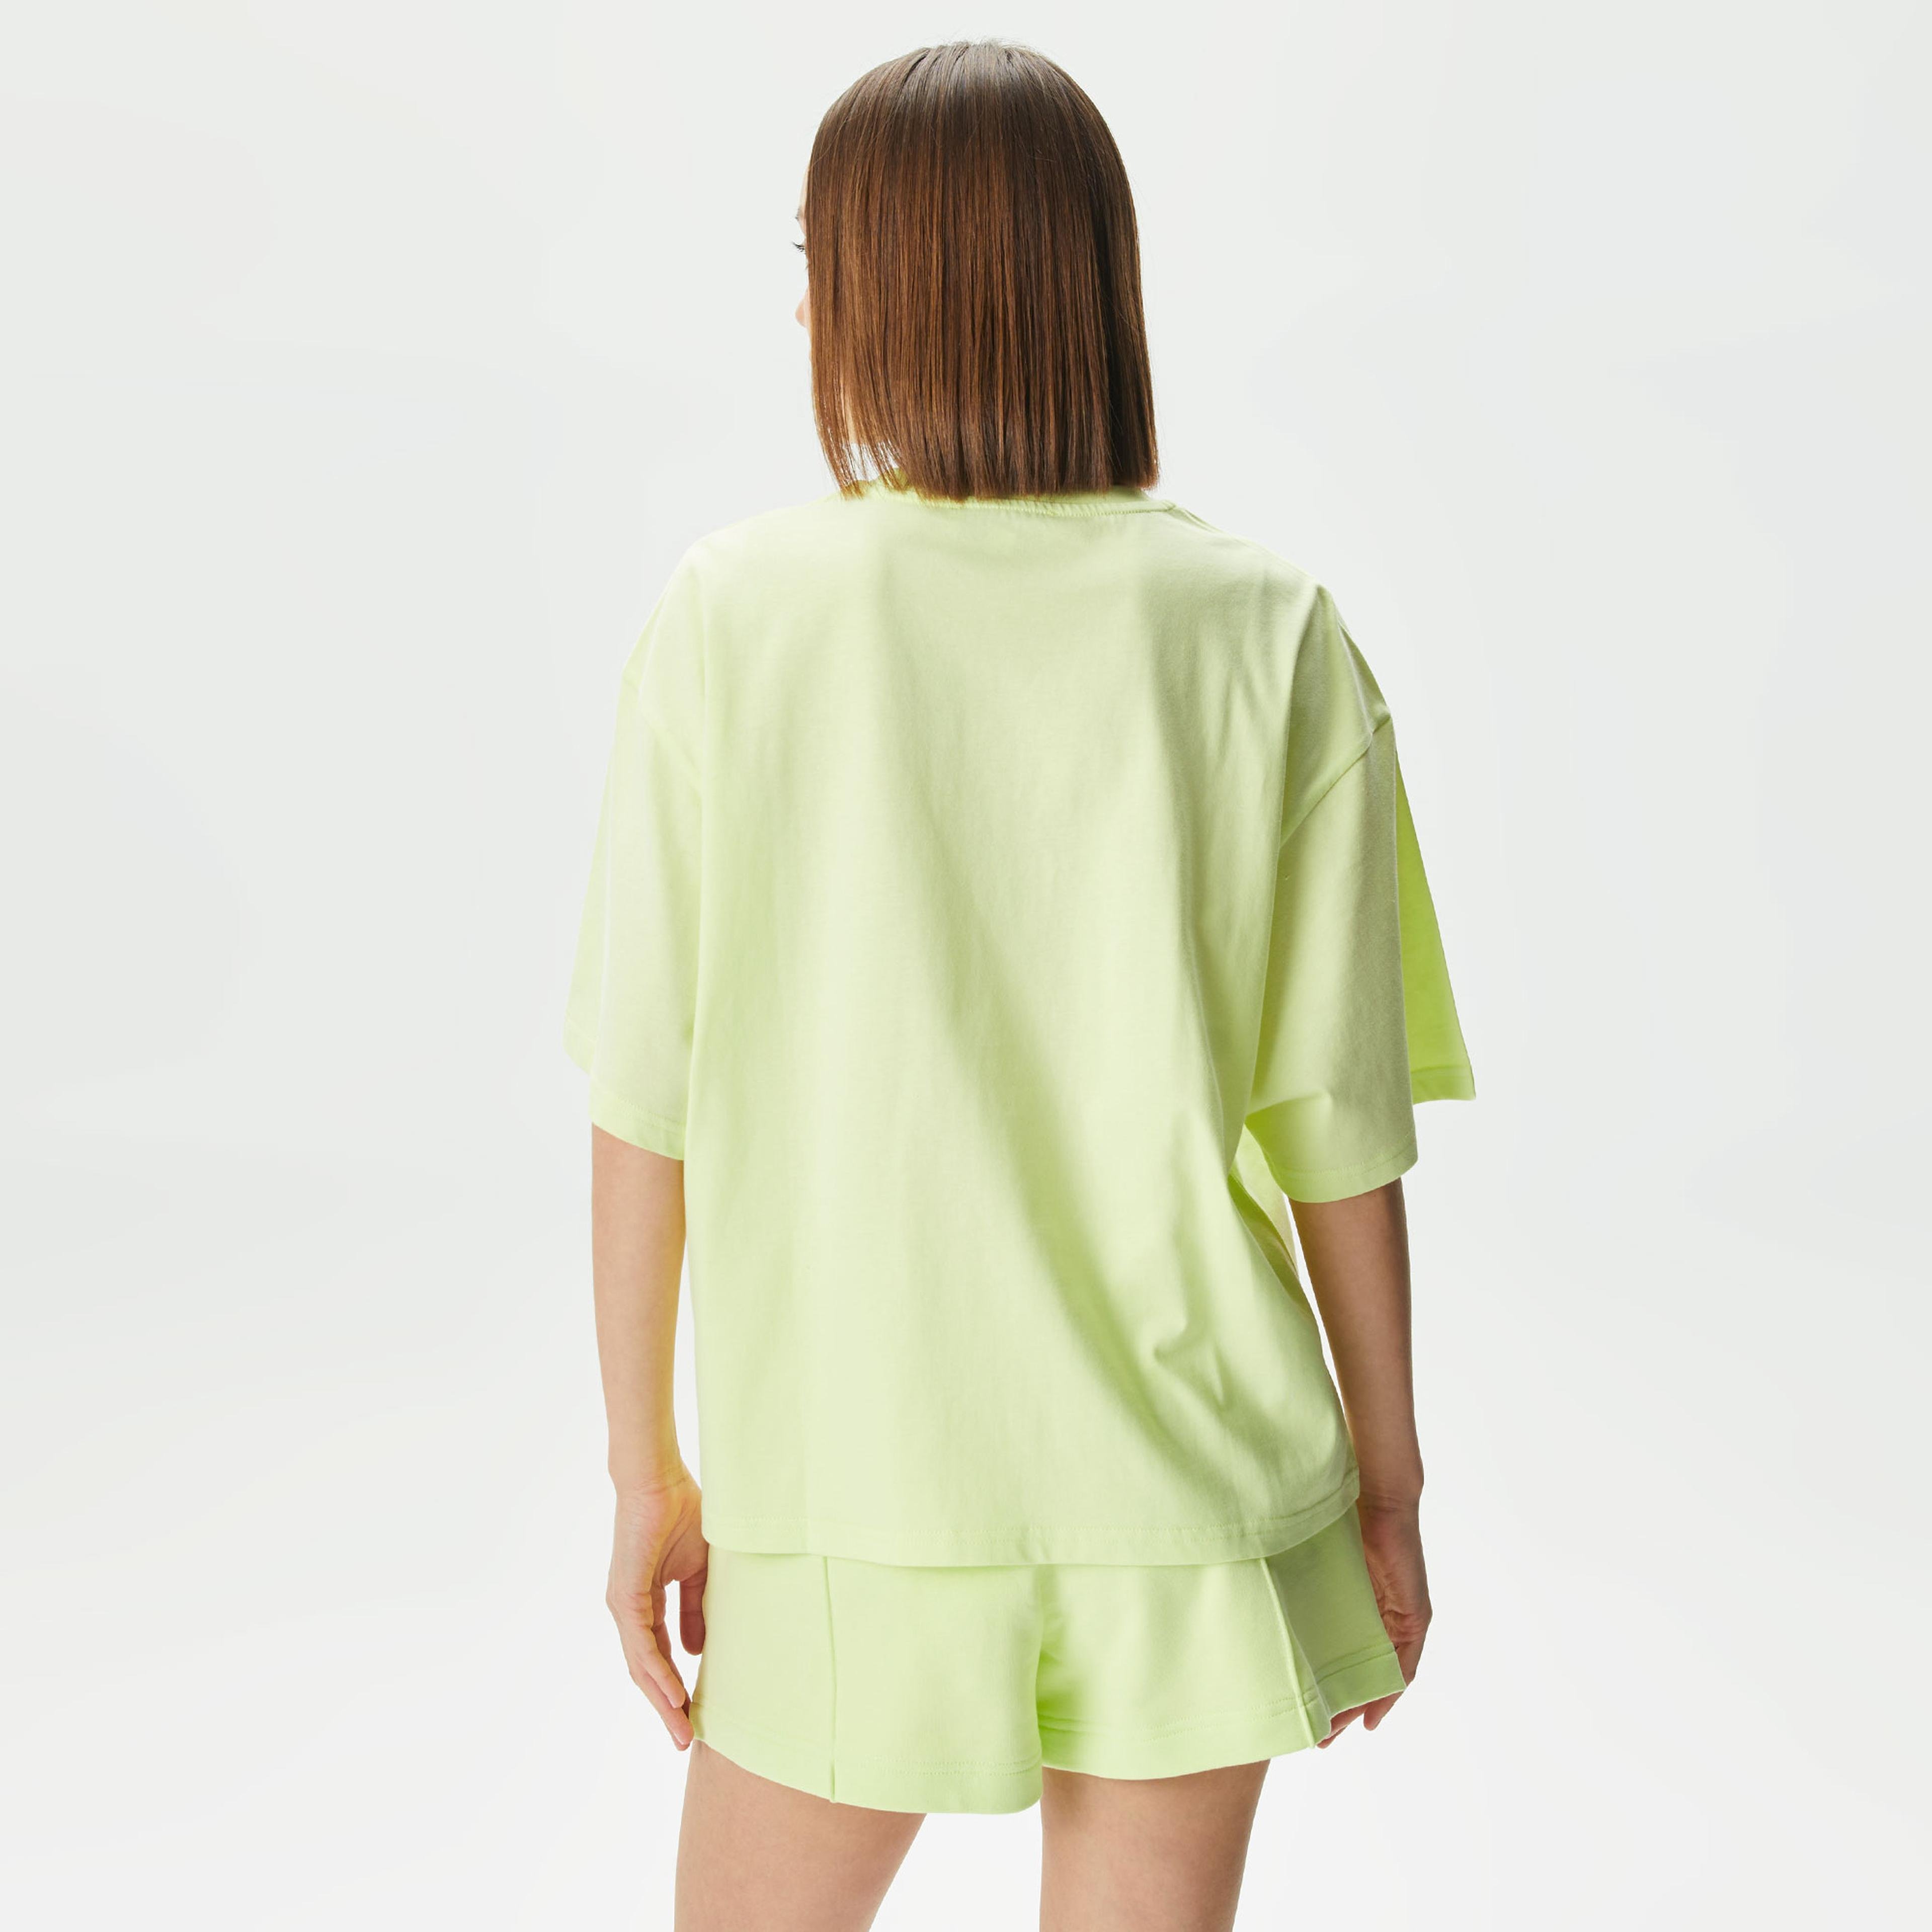 Les Benjamins Essential 301 Kadın Yeşil T-Shirt